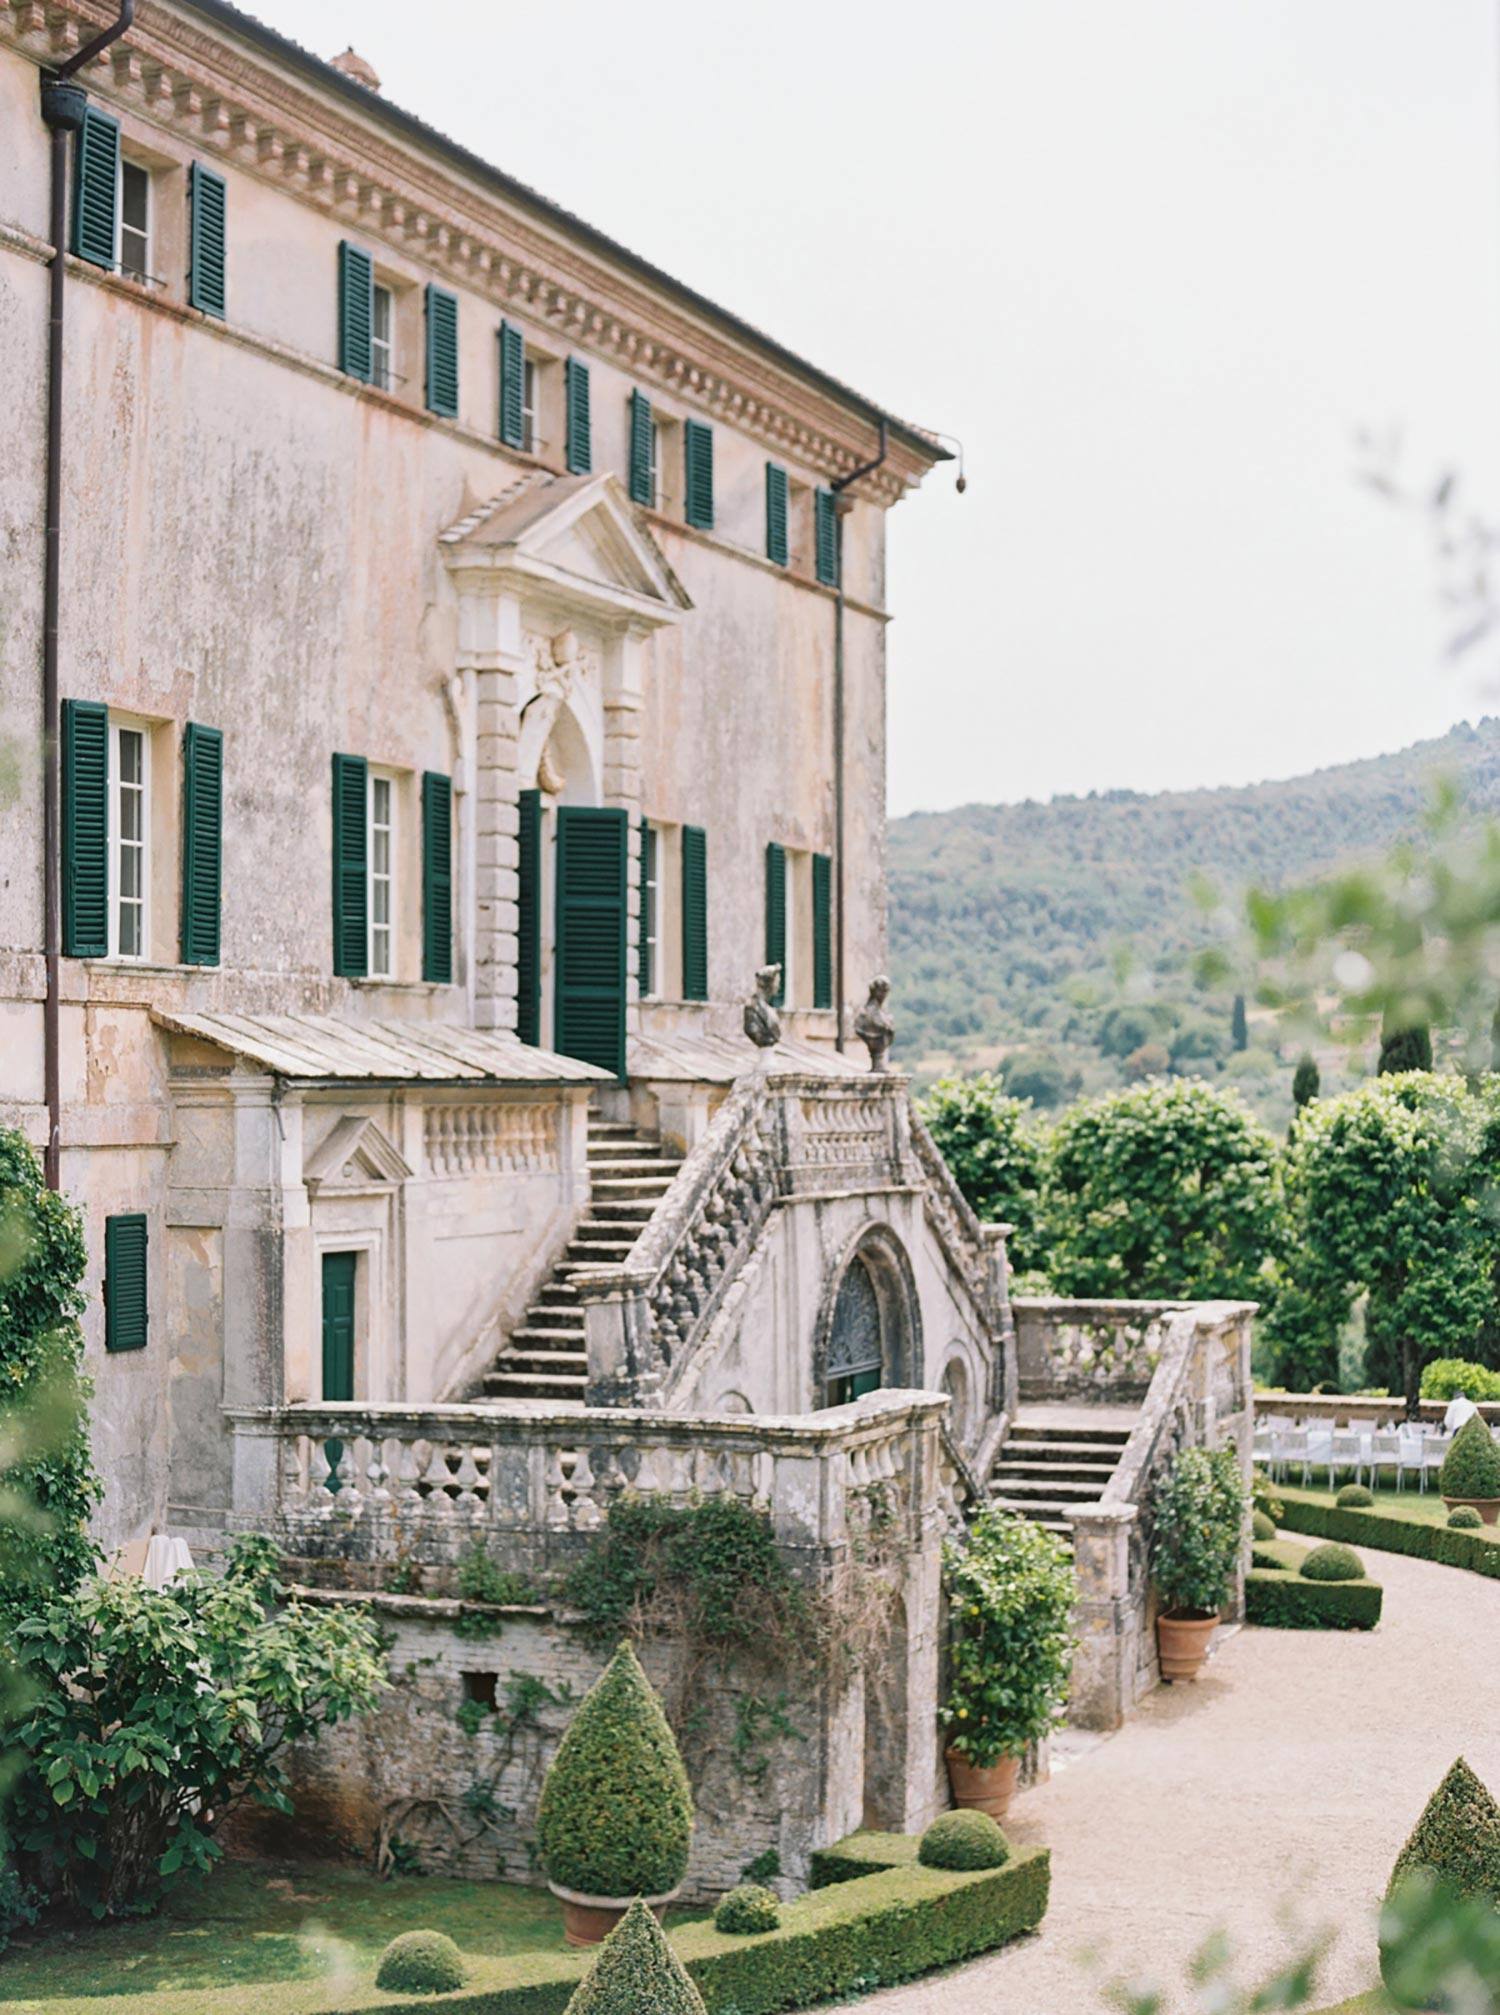 historic Italian villa with manicured garden lawn